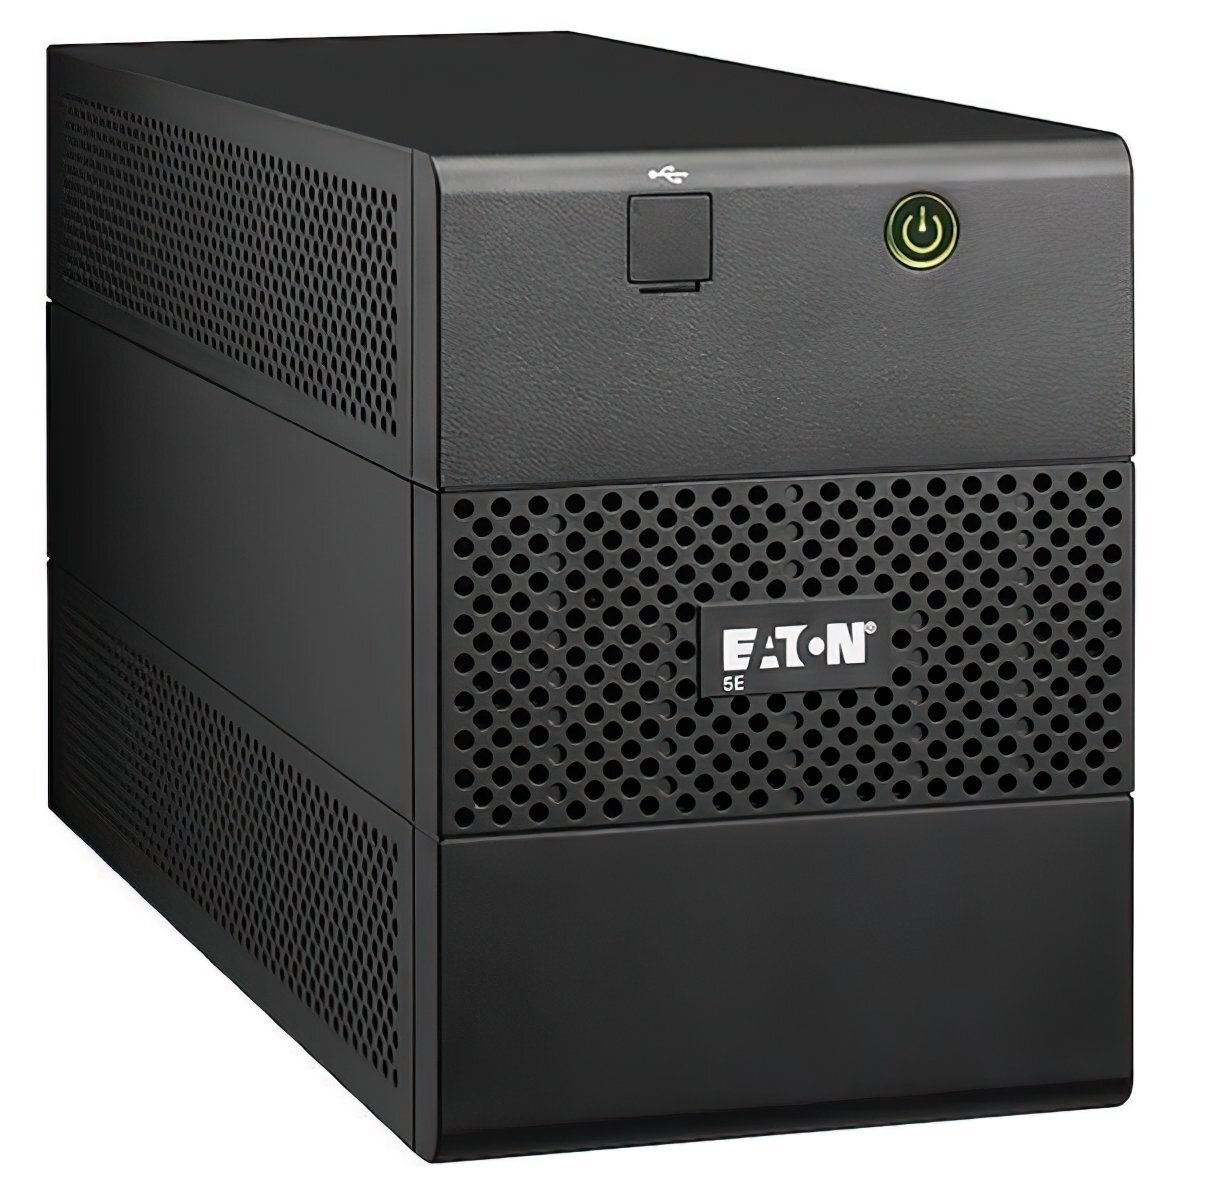 Eaton 5E 850VA, USB, DIN